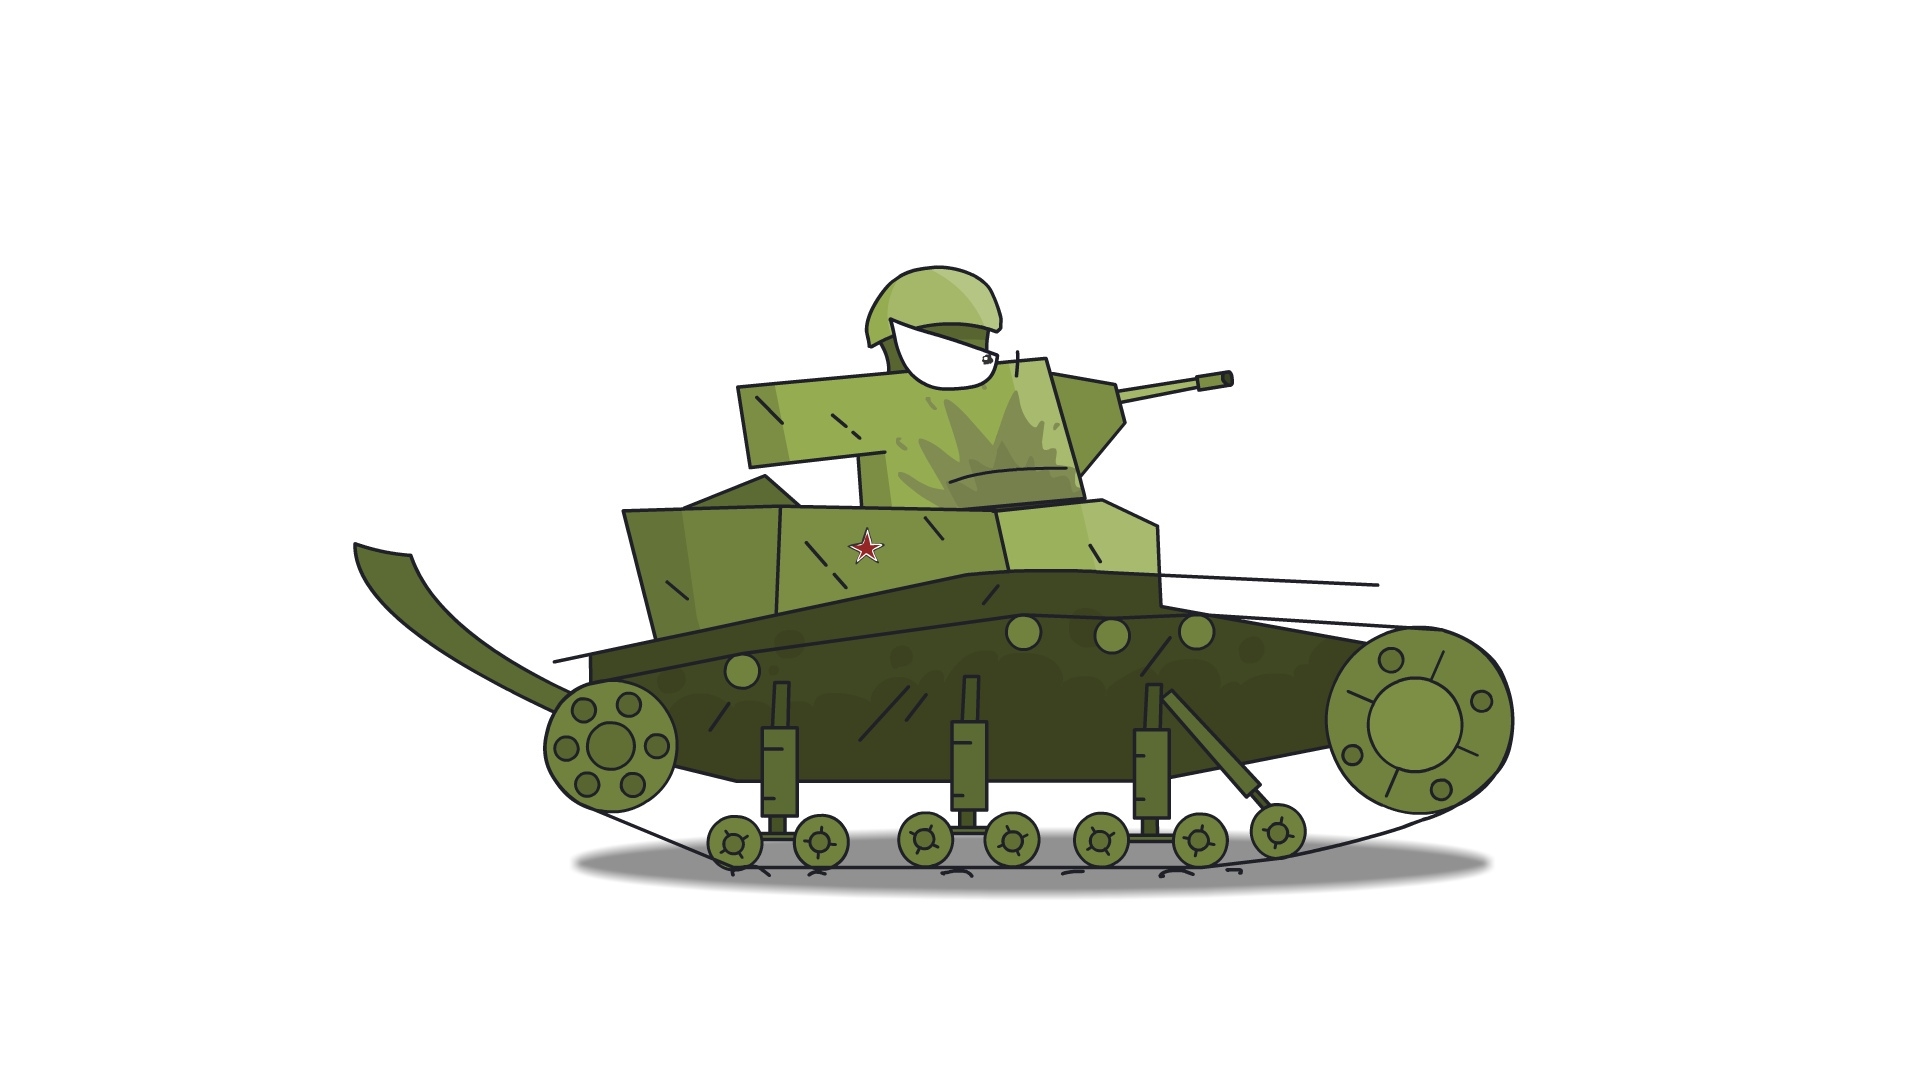 Мс кв. Генерал МС 1 Геранд. МС-1 танк Геранд. Танк МС-1 сбоку. Т-35 танк Геранд.